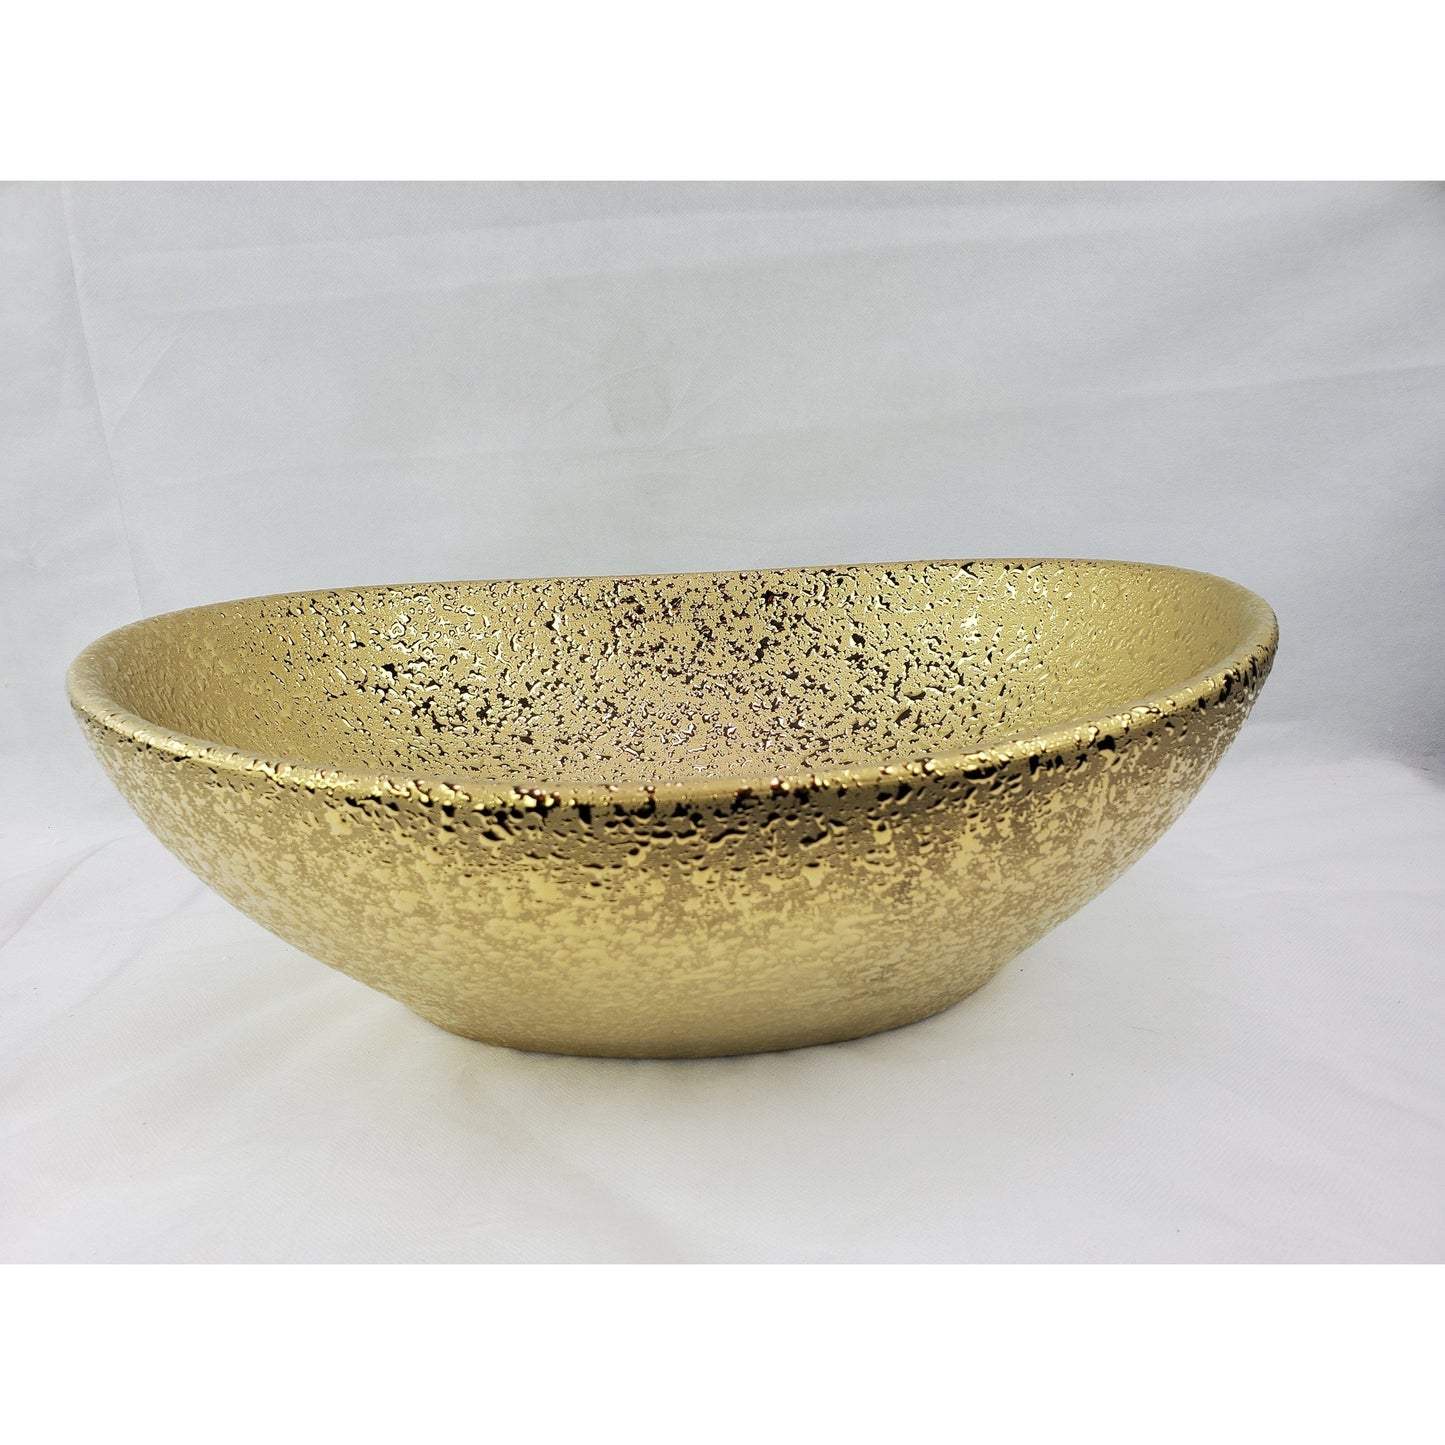 American Imaginations AI-27933 Oval Gold Ceramic Bathroom Vessel Sink with Enamel Glaze Finish